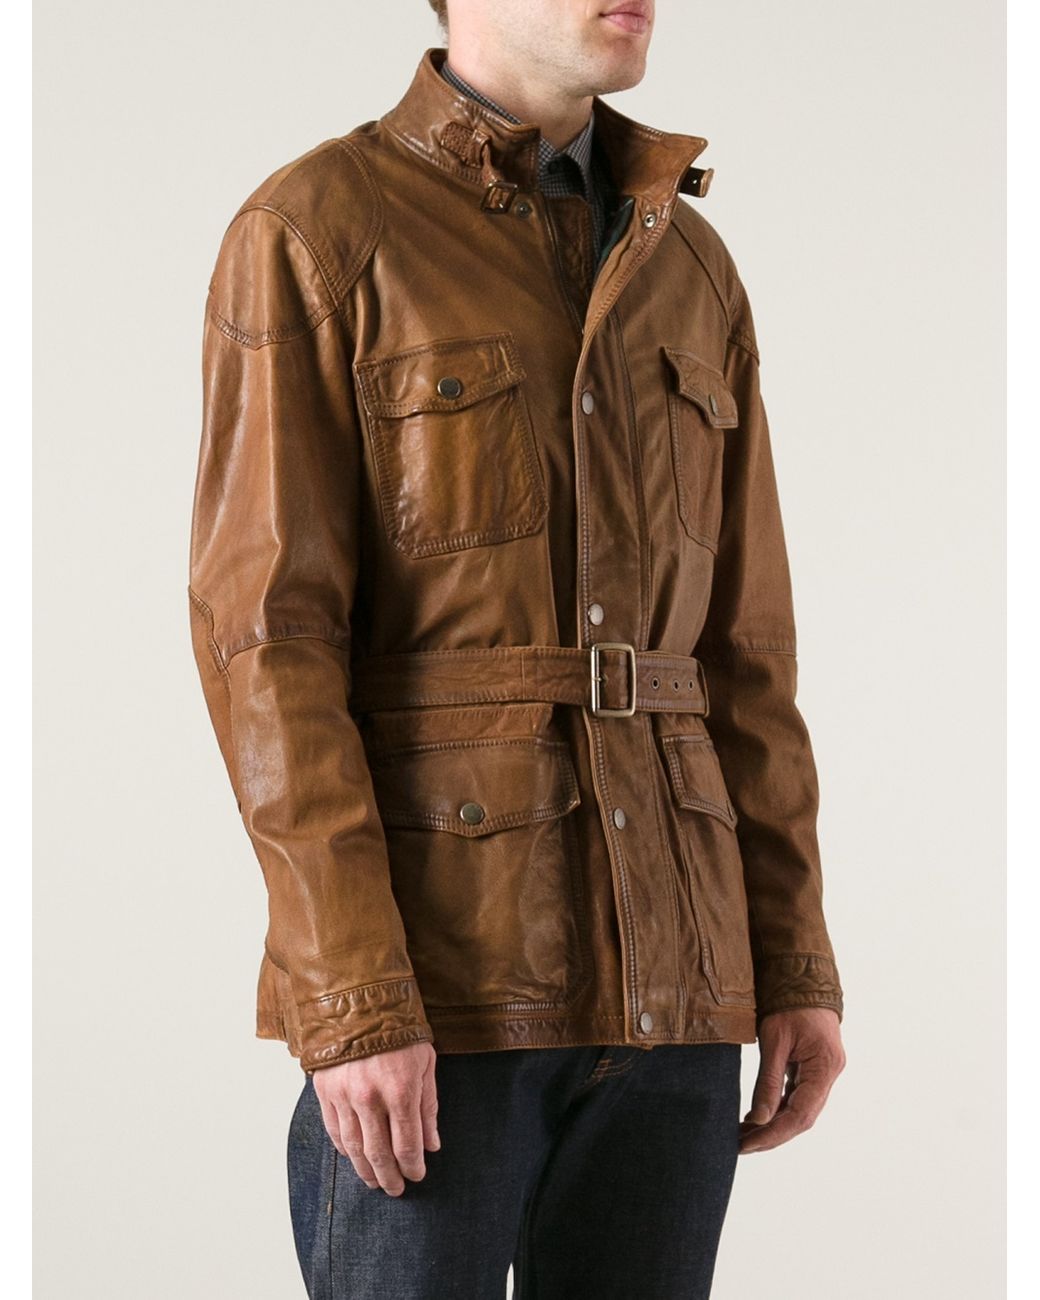 Leather vest Hackett London Brown size XL International in Leather -  14686048